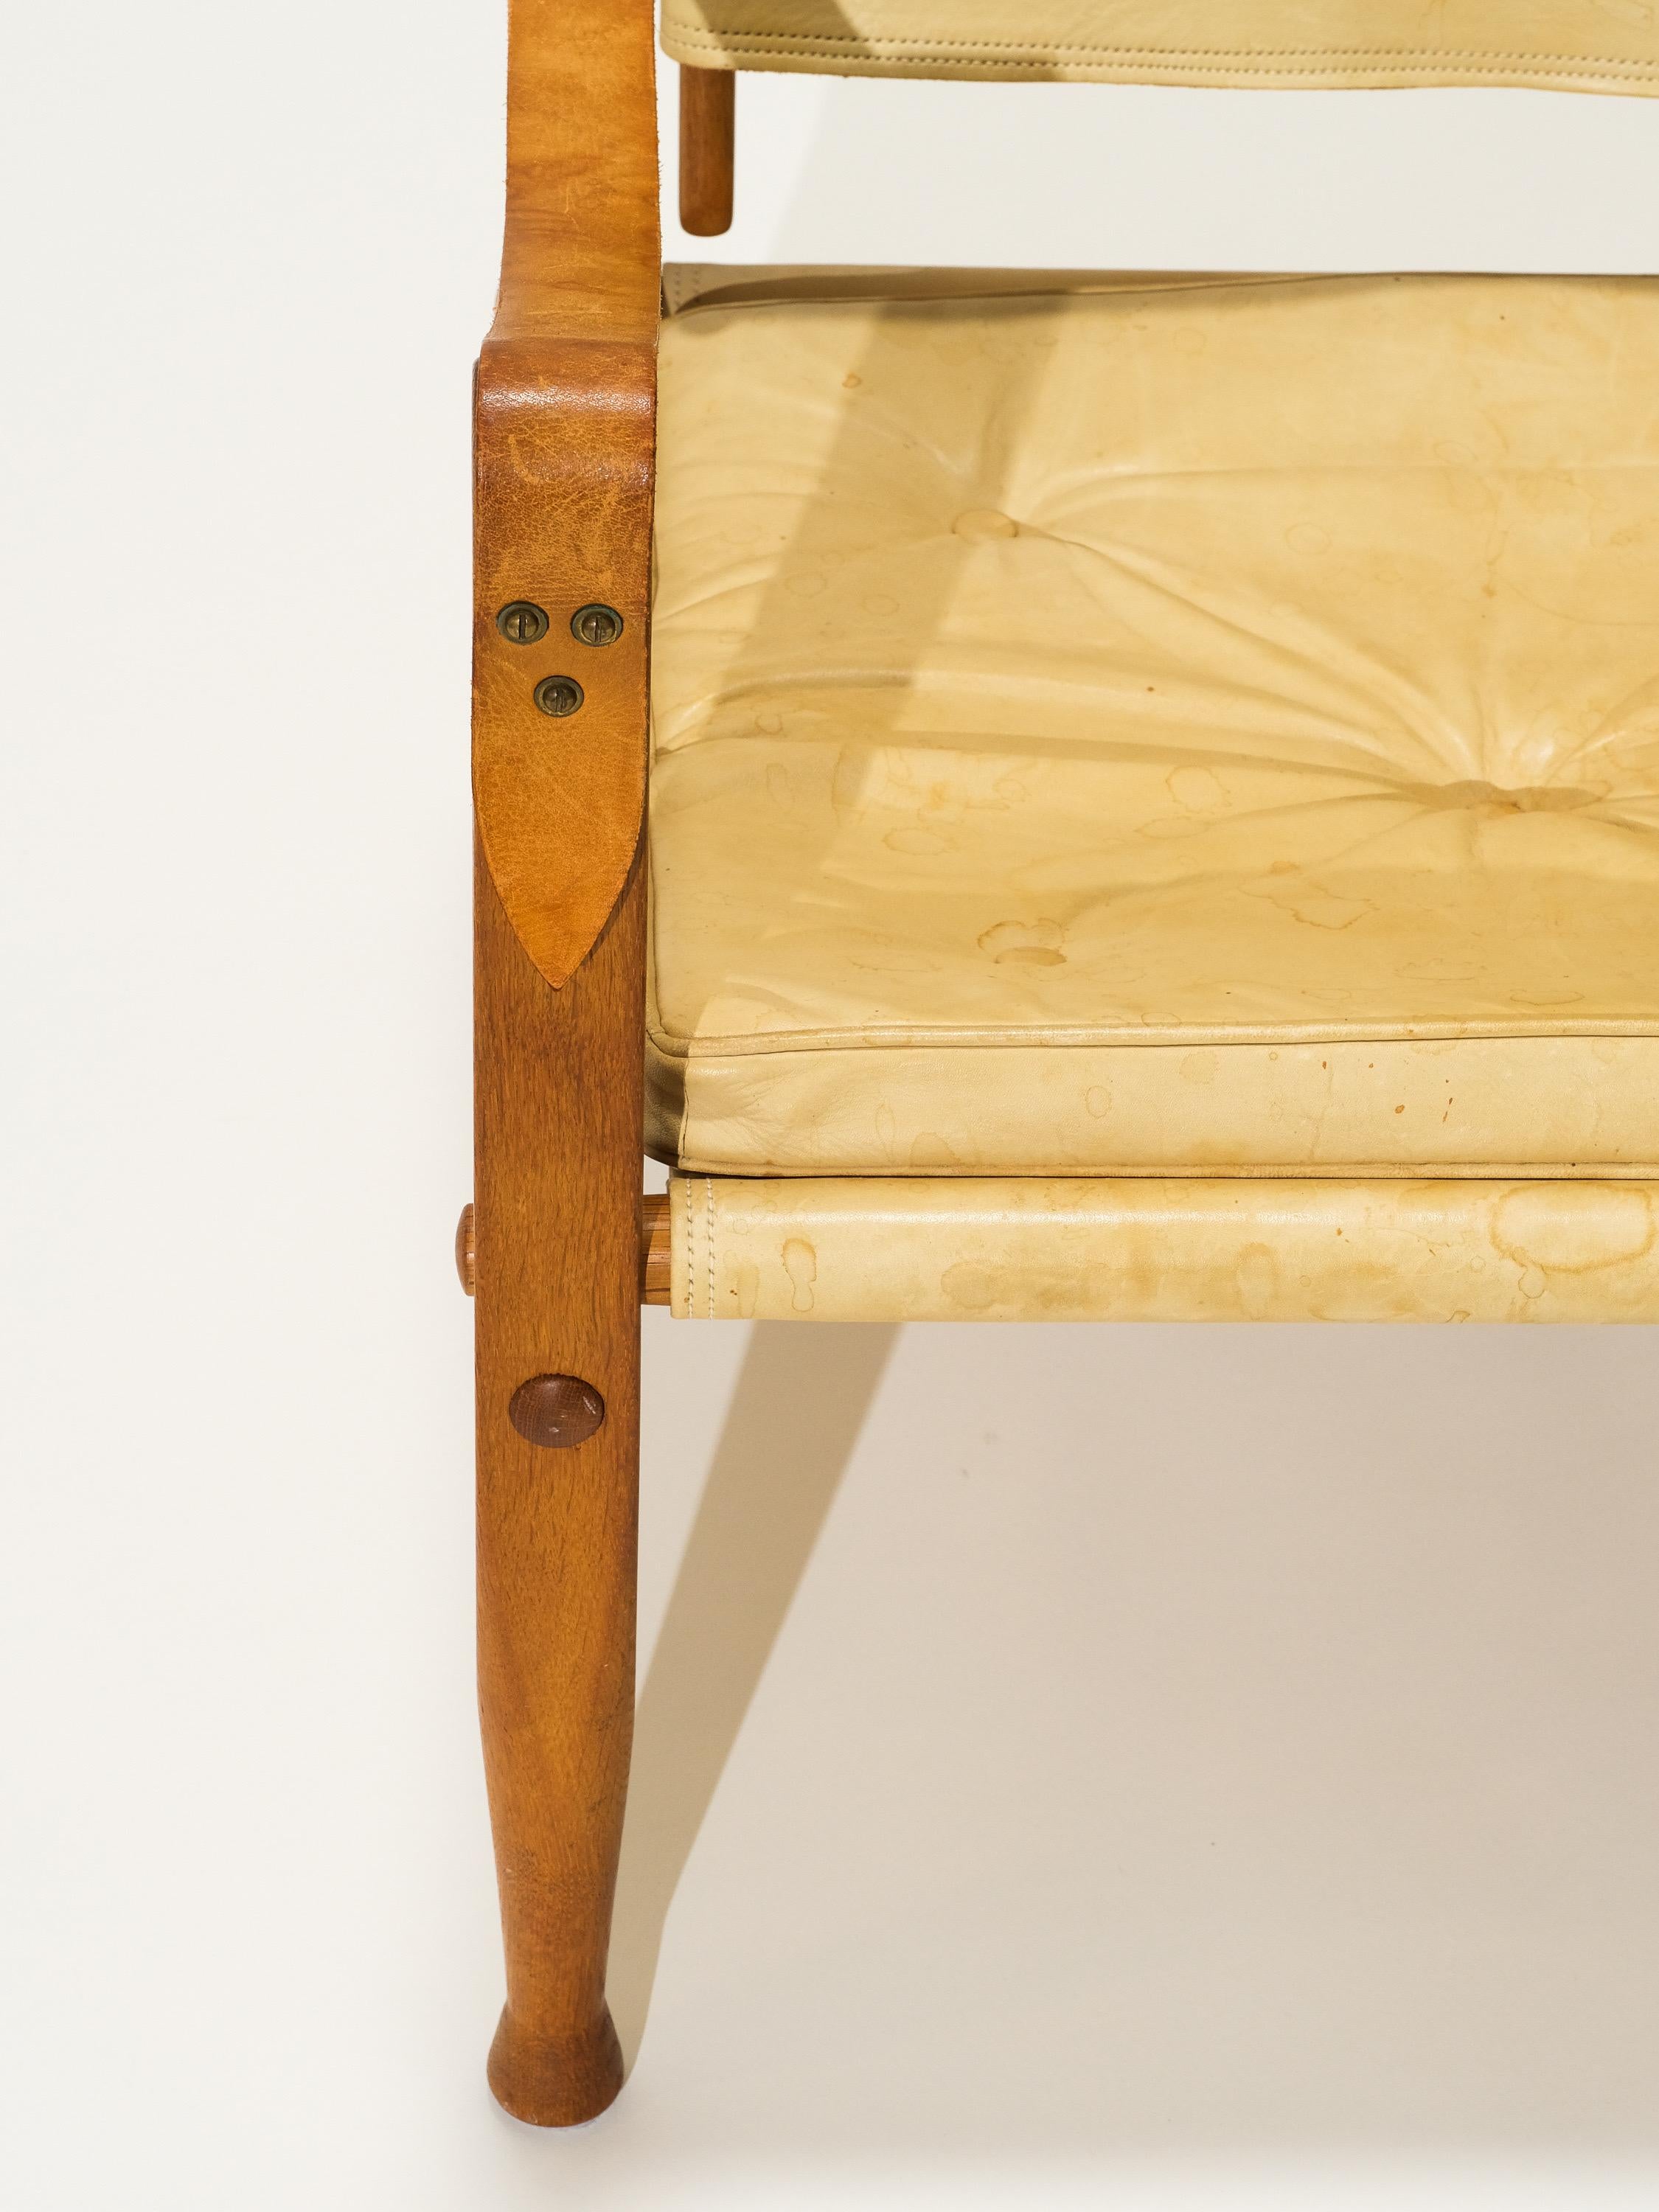 Cuir Kaare Klint Safari Chair Produit par Rud Rasmussen au Danemark